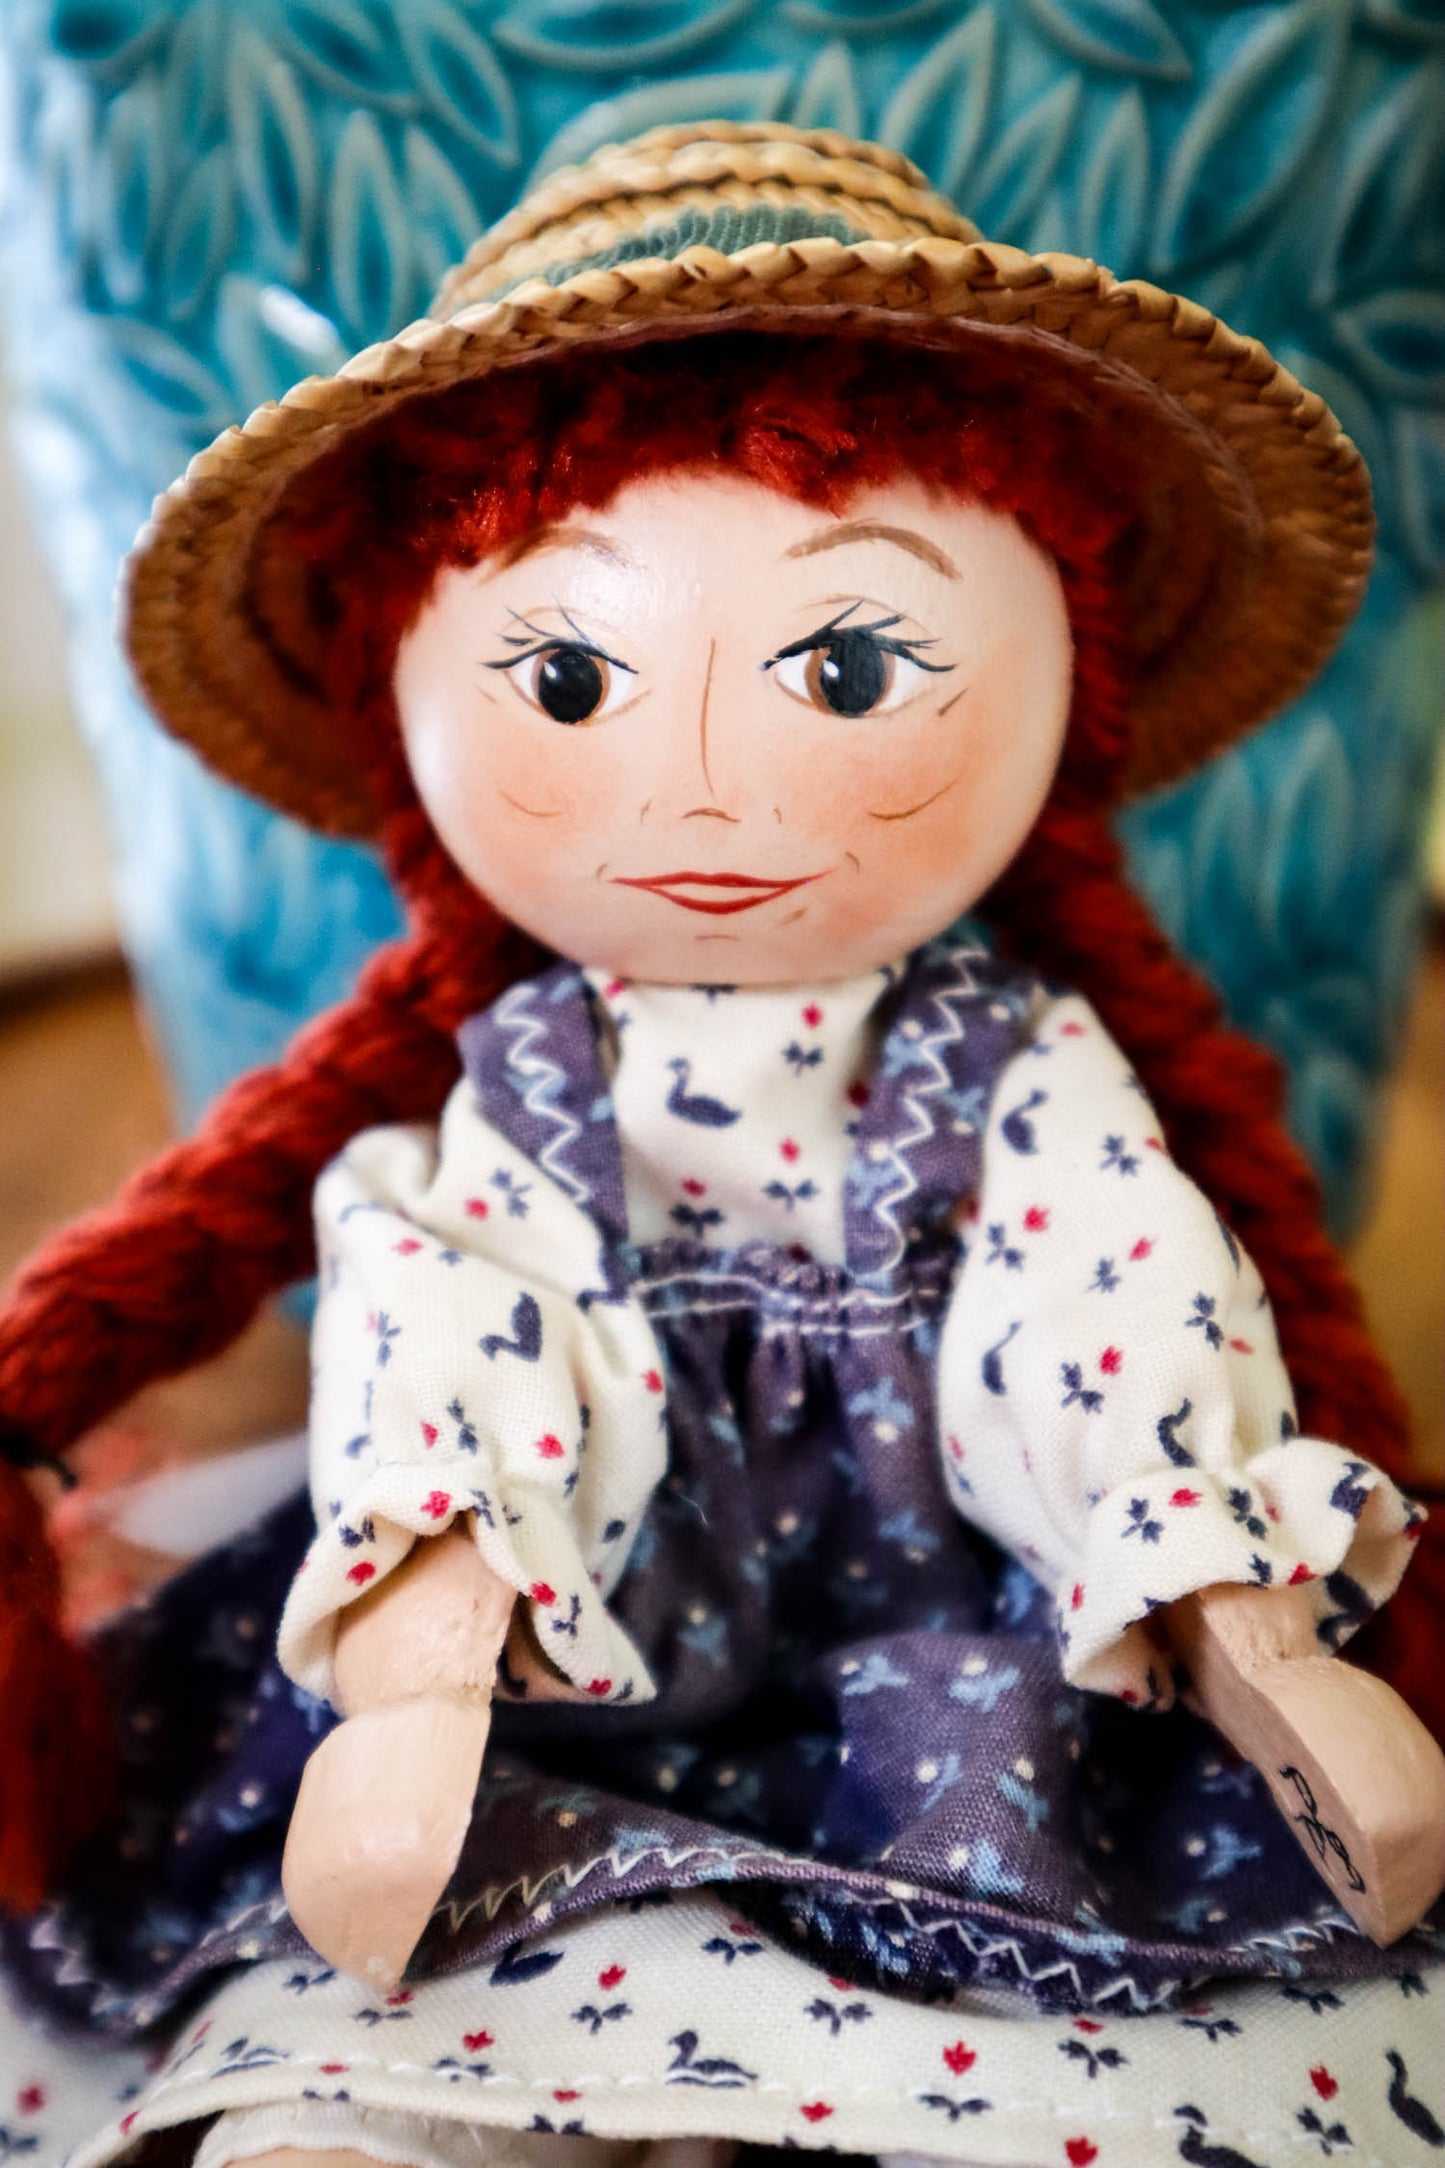 Ann-with-an-e Clothespin Doll